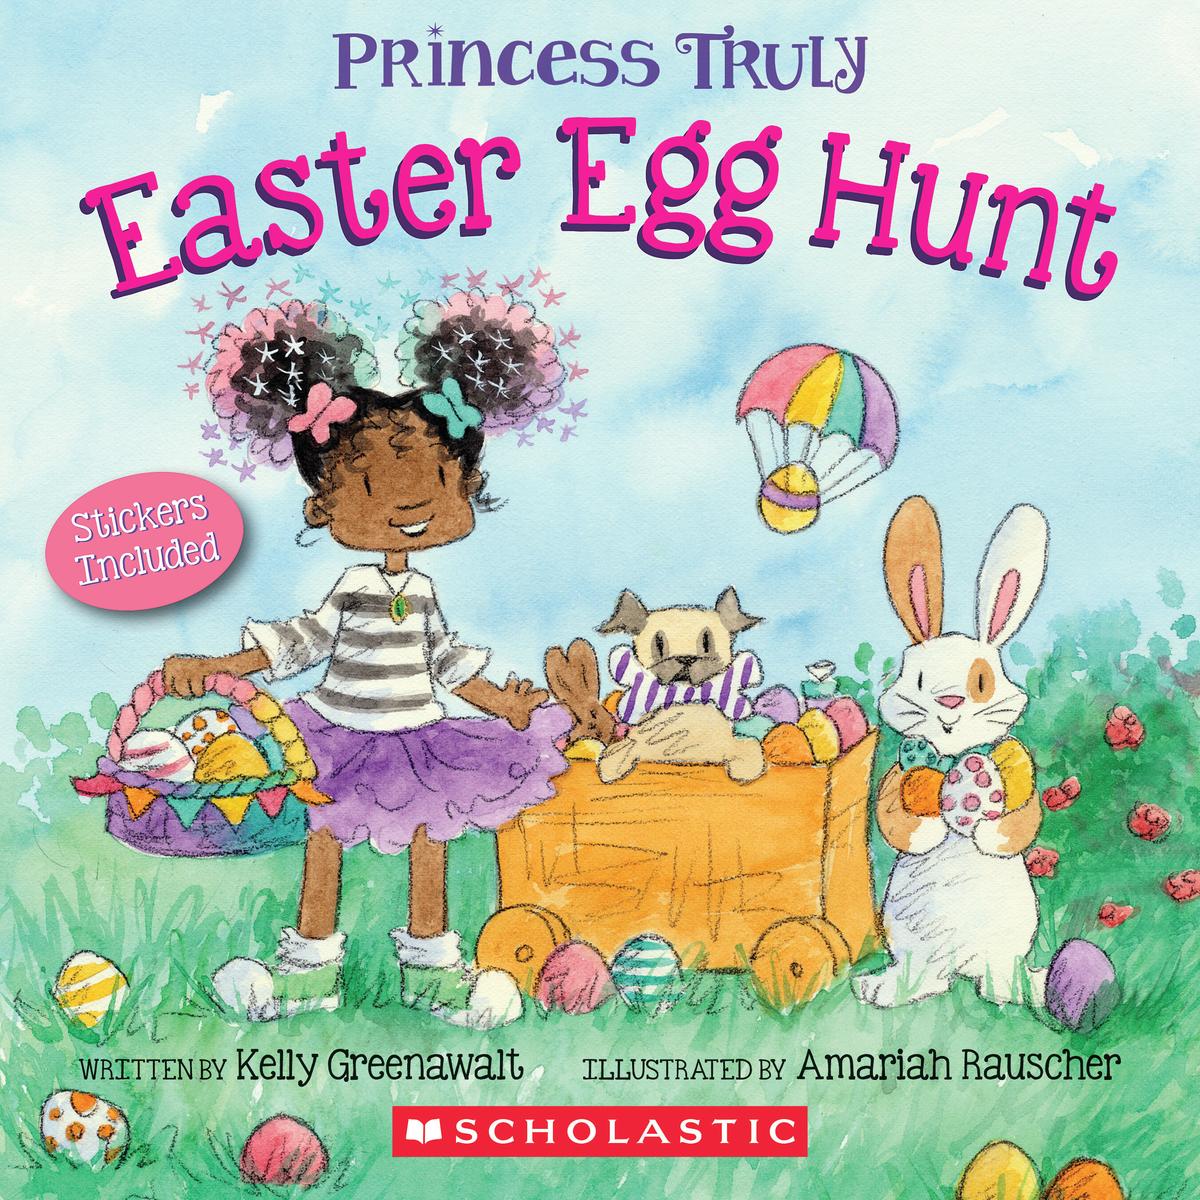 Princess Truly's Easter Egg Hunt - 